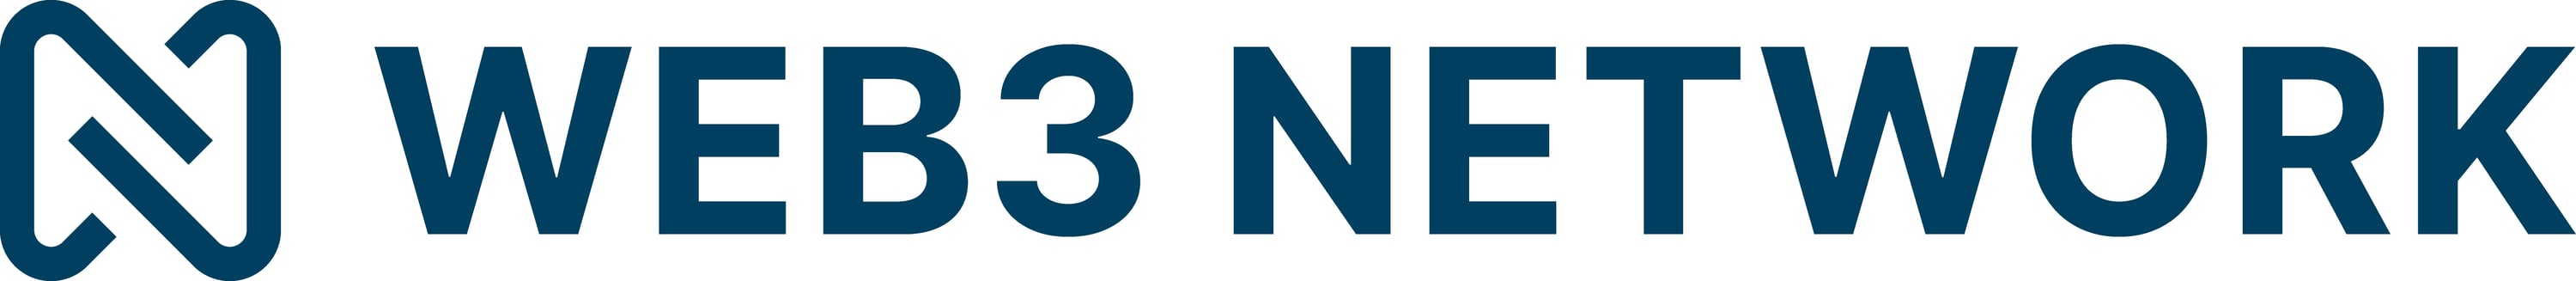 web3 network - logo